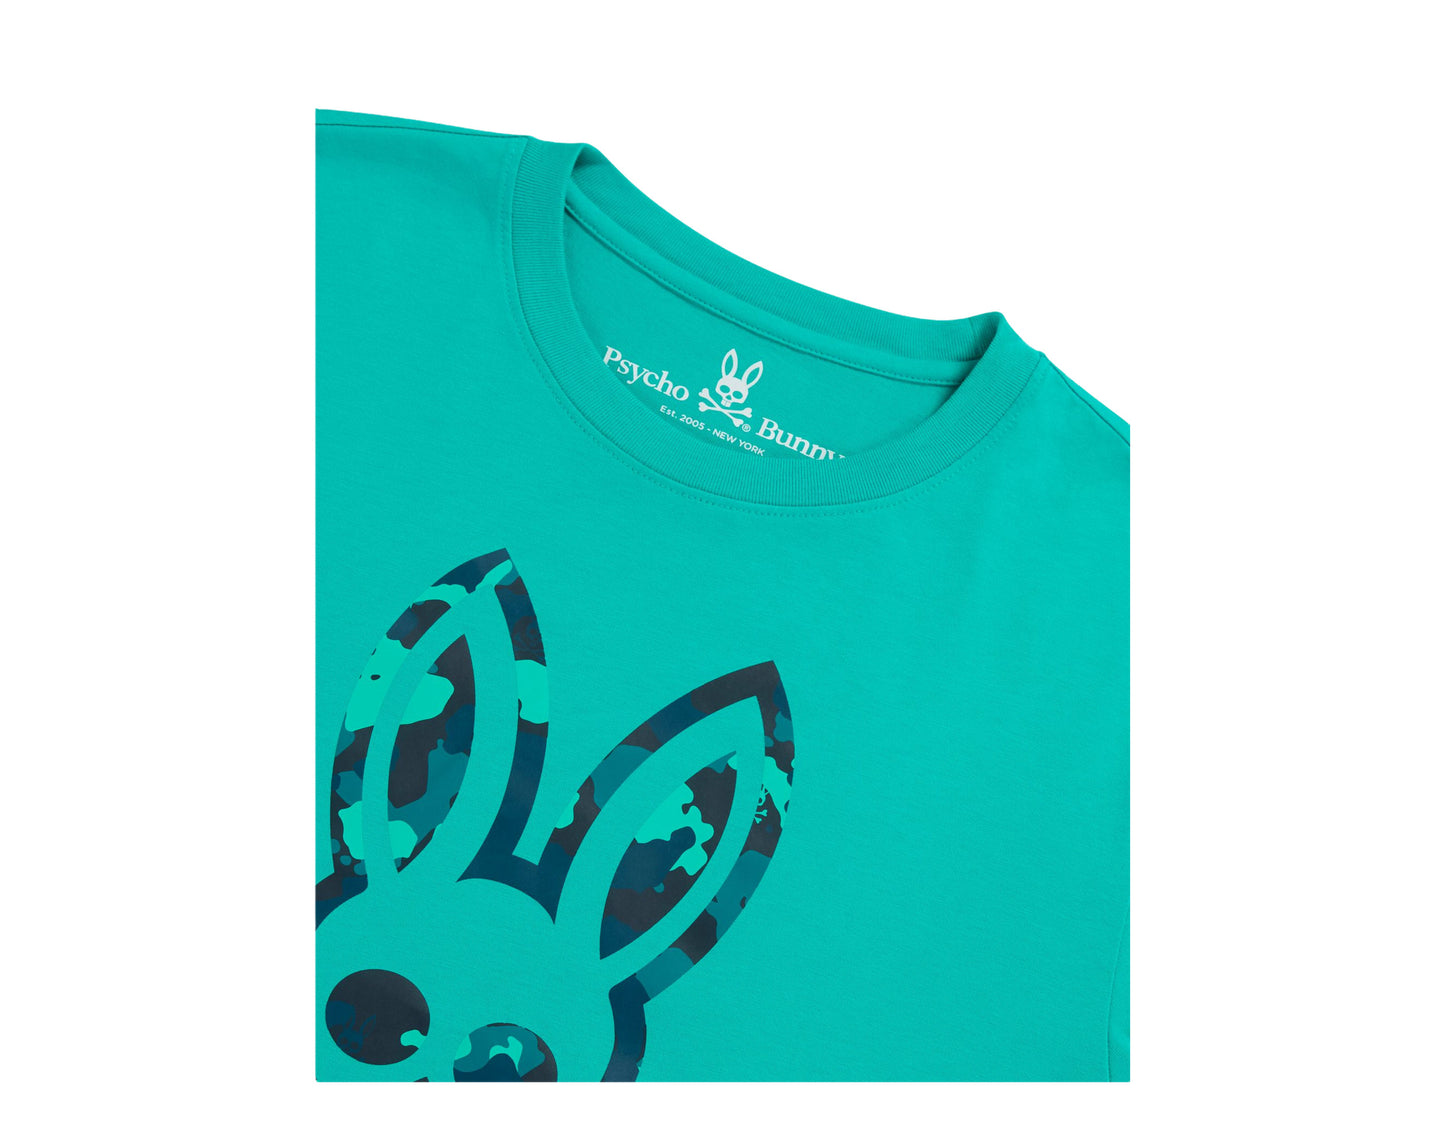 Psycho Bunny Howgate Camo Graphic Men's Tee Shirt